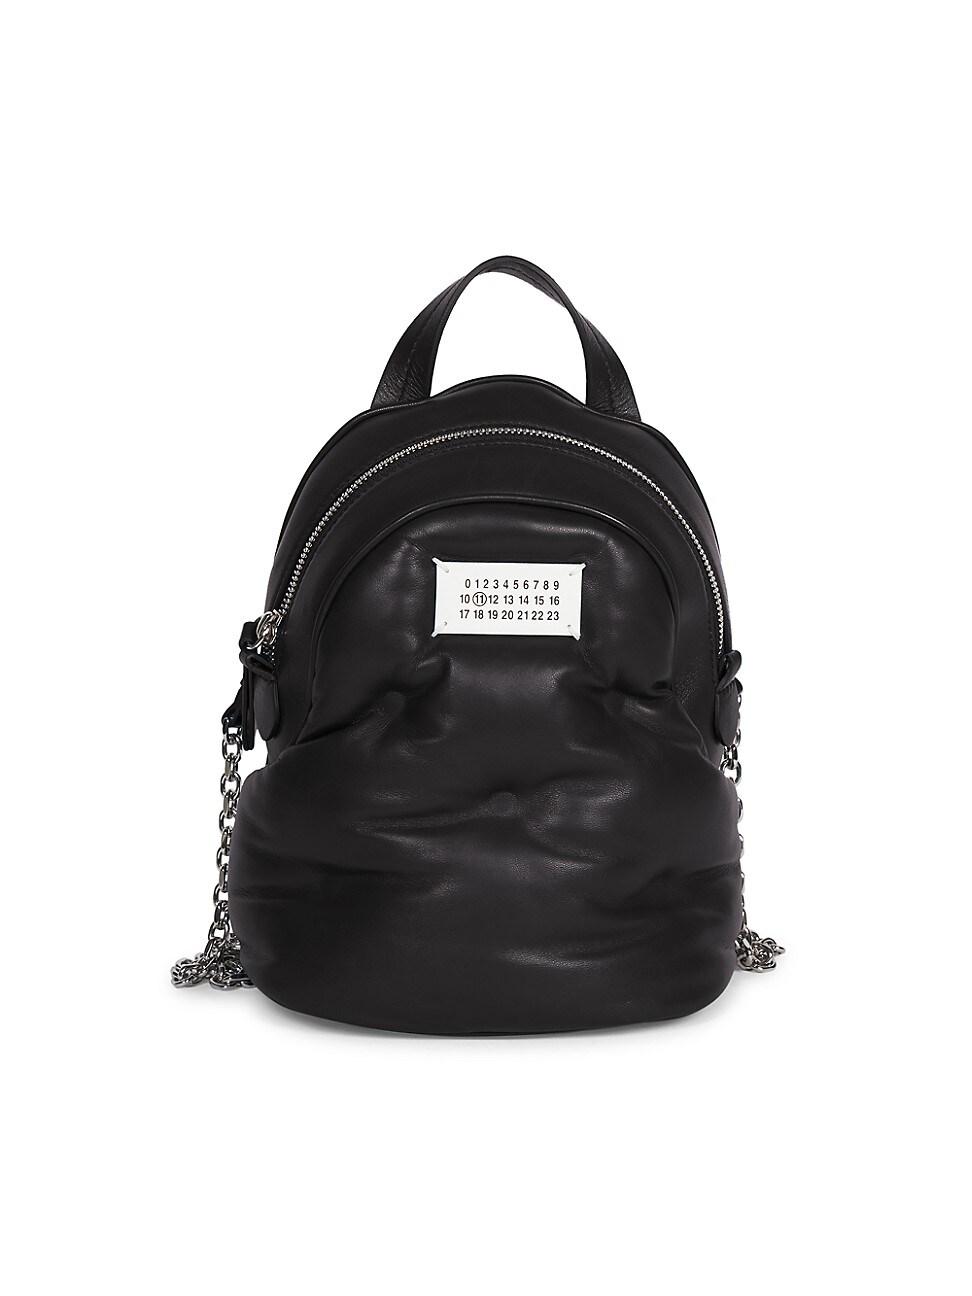 Maison Margiela Glam Slam Leather Backpack in Black | Lyst